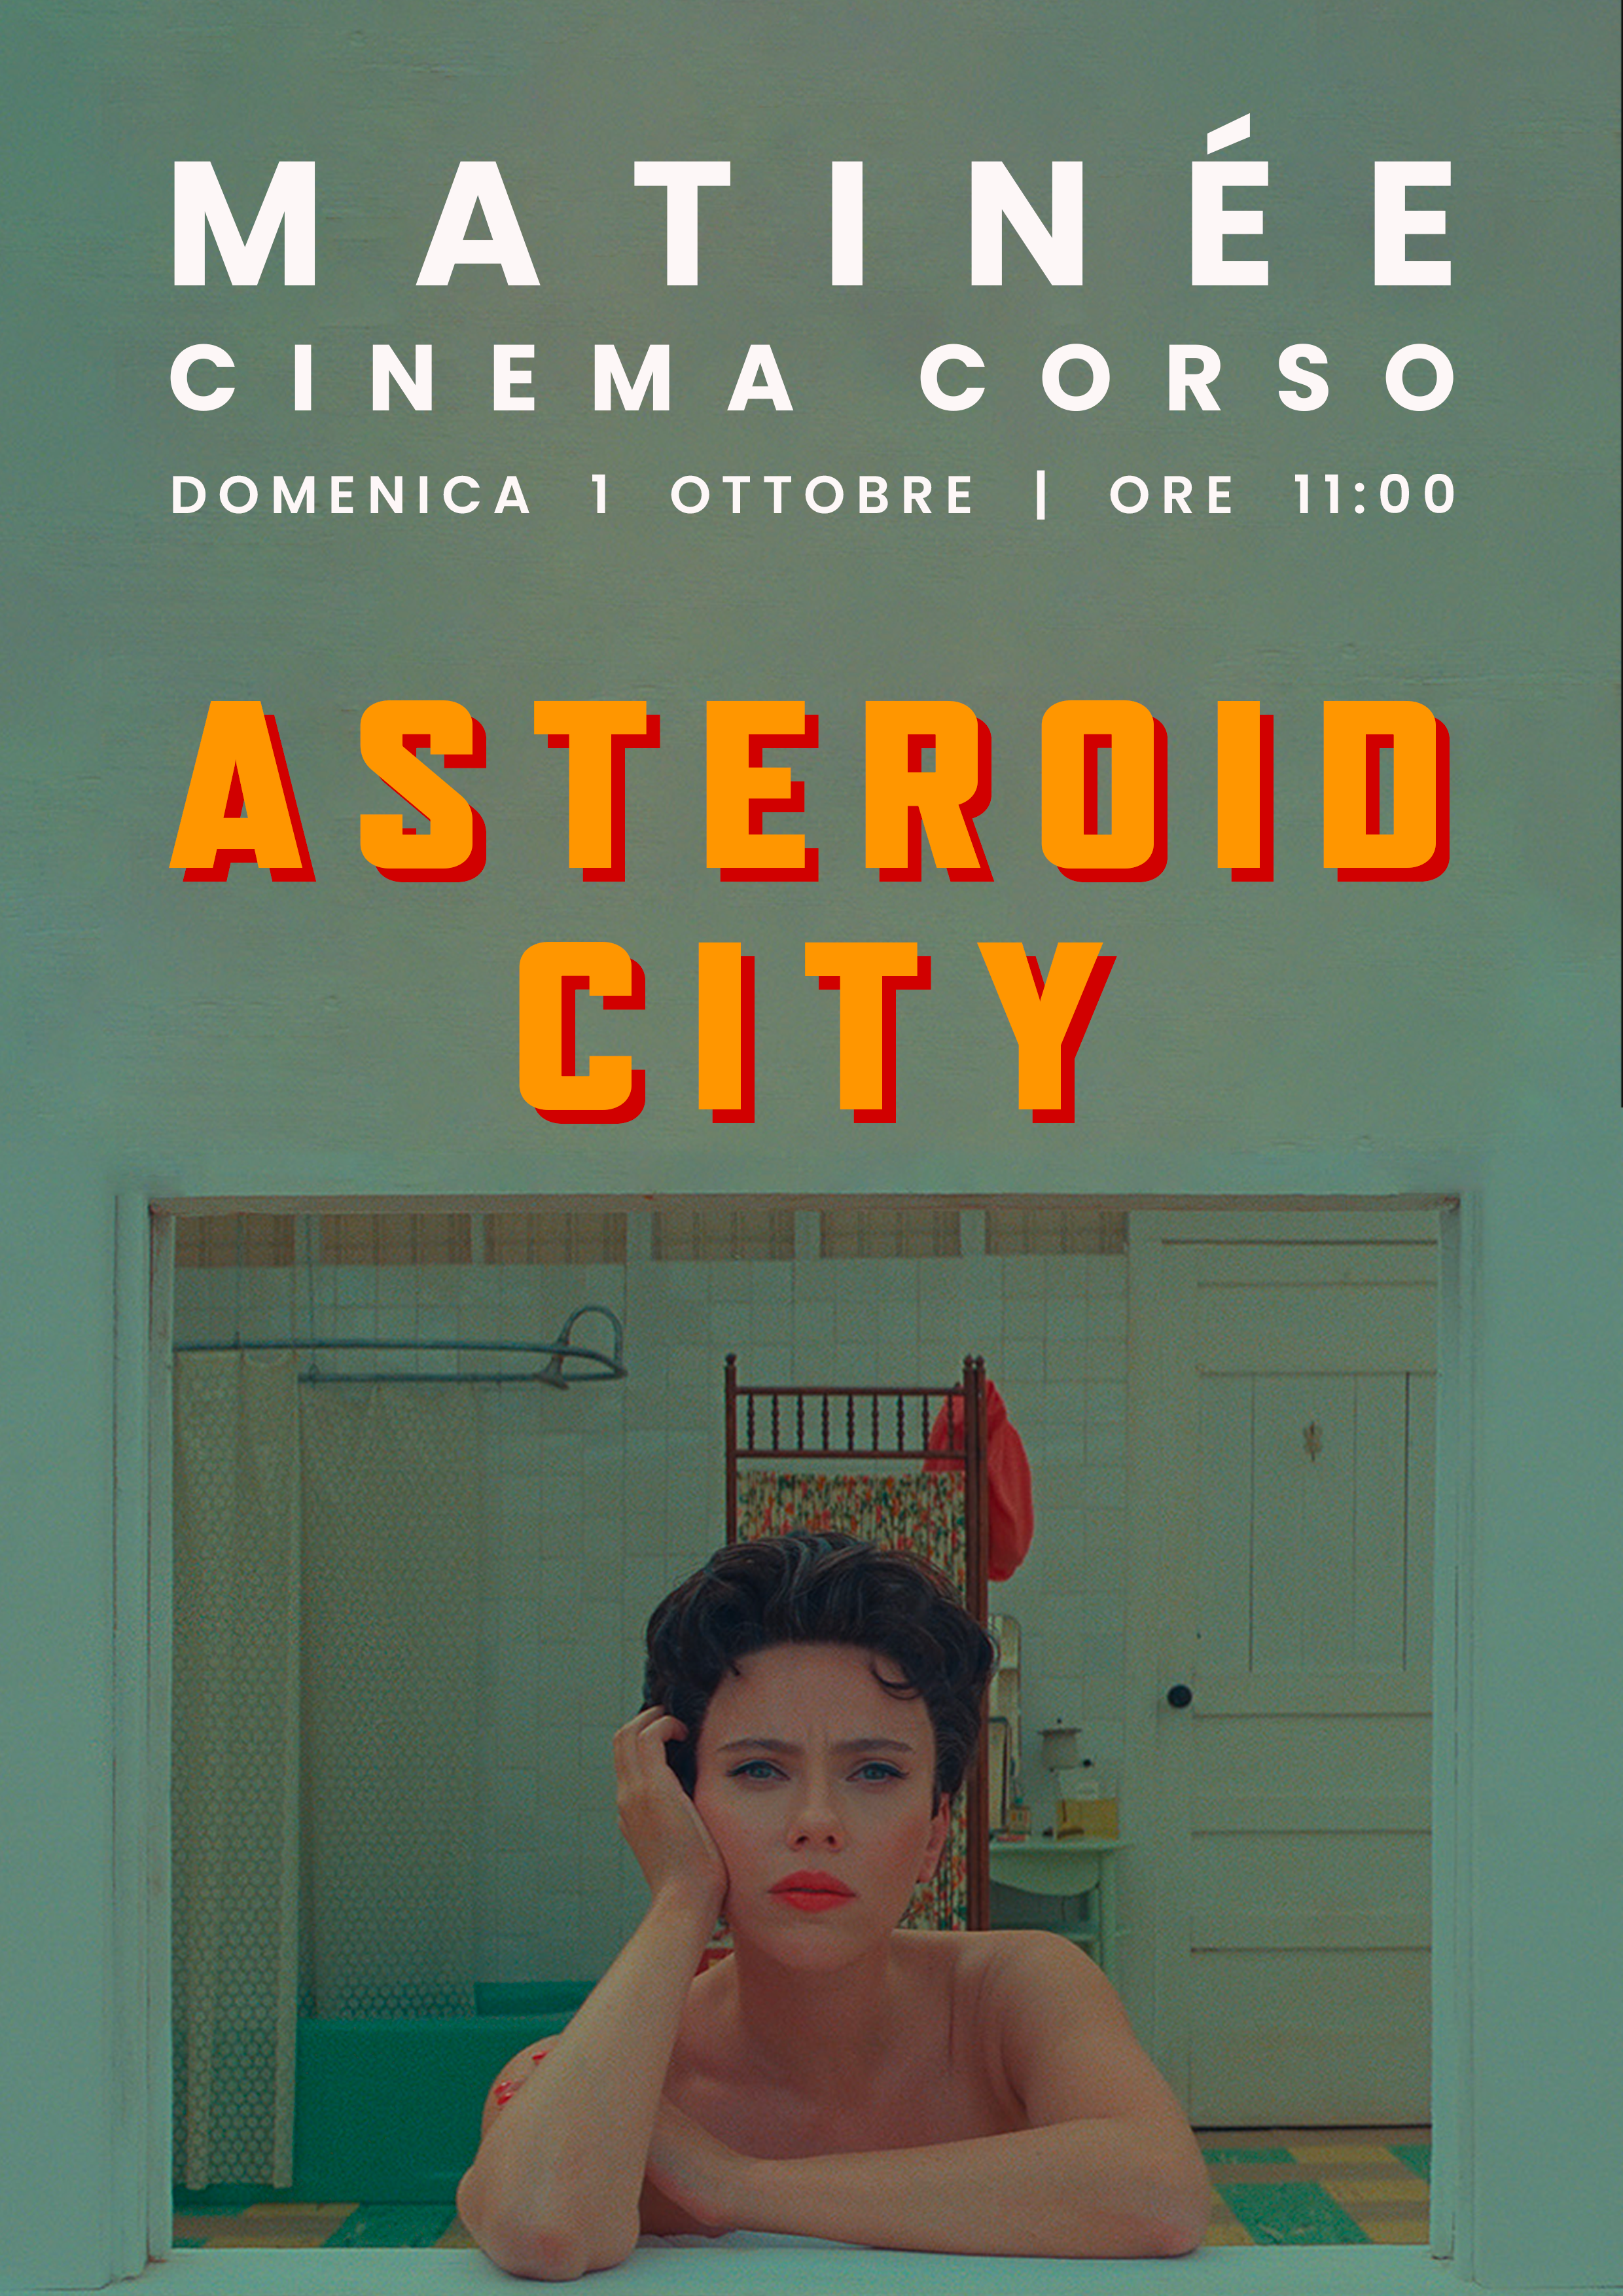 Matinée al Cinema Corso - ASTEROID CITY